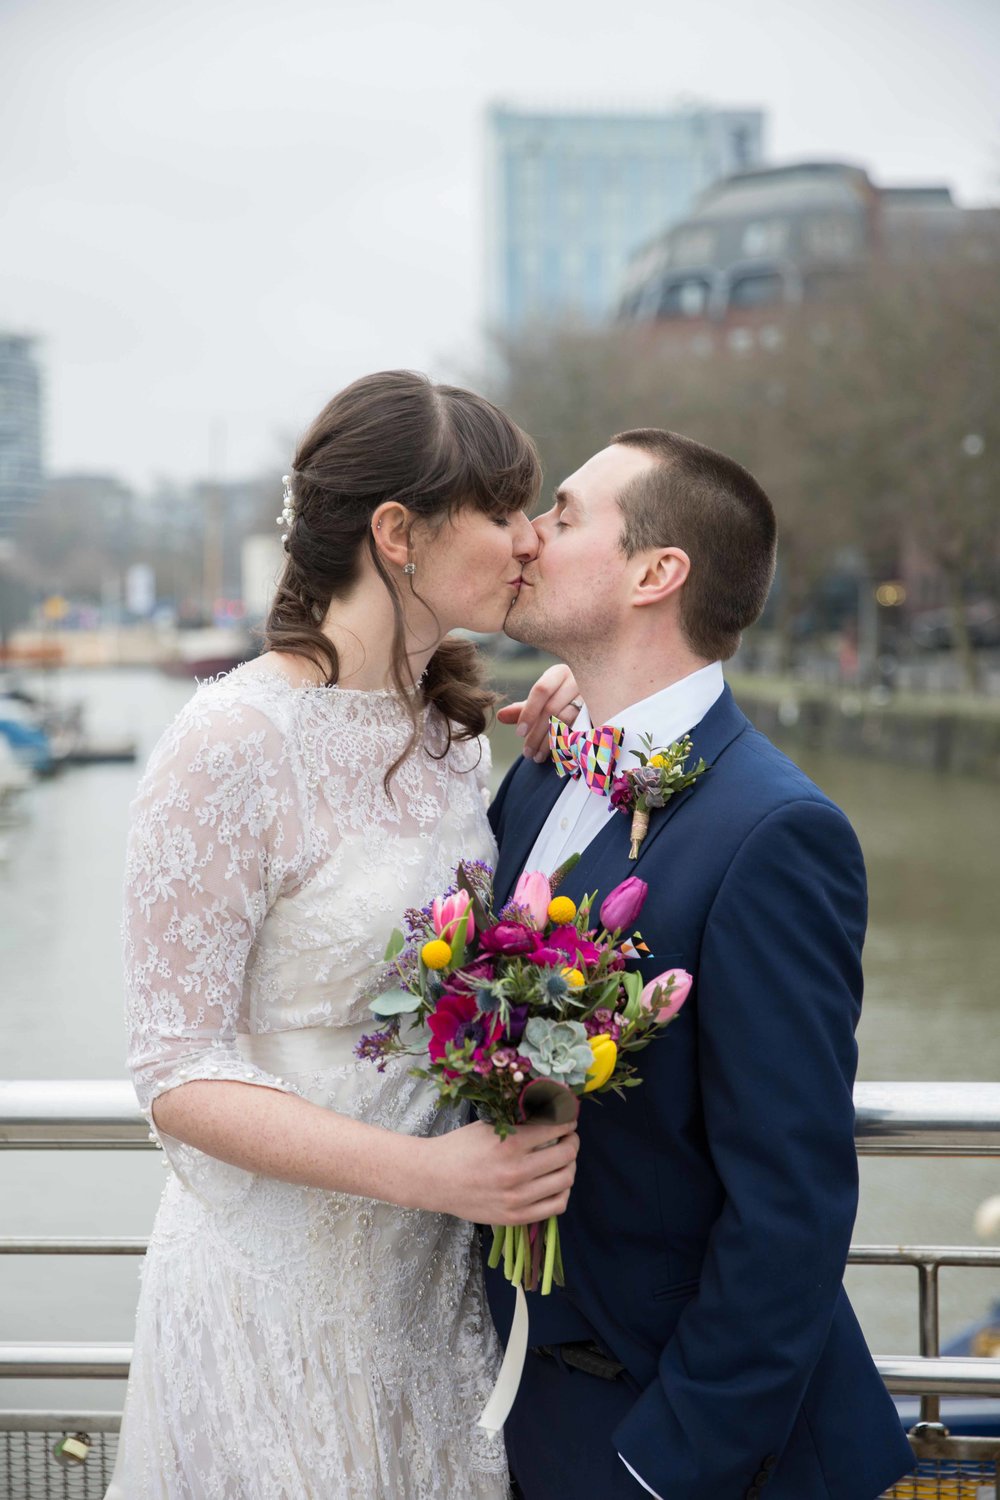 Adam & Faye - Wright Wedding Photography - Bristol Wedding Photographer -246.jpg